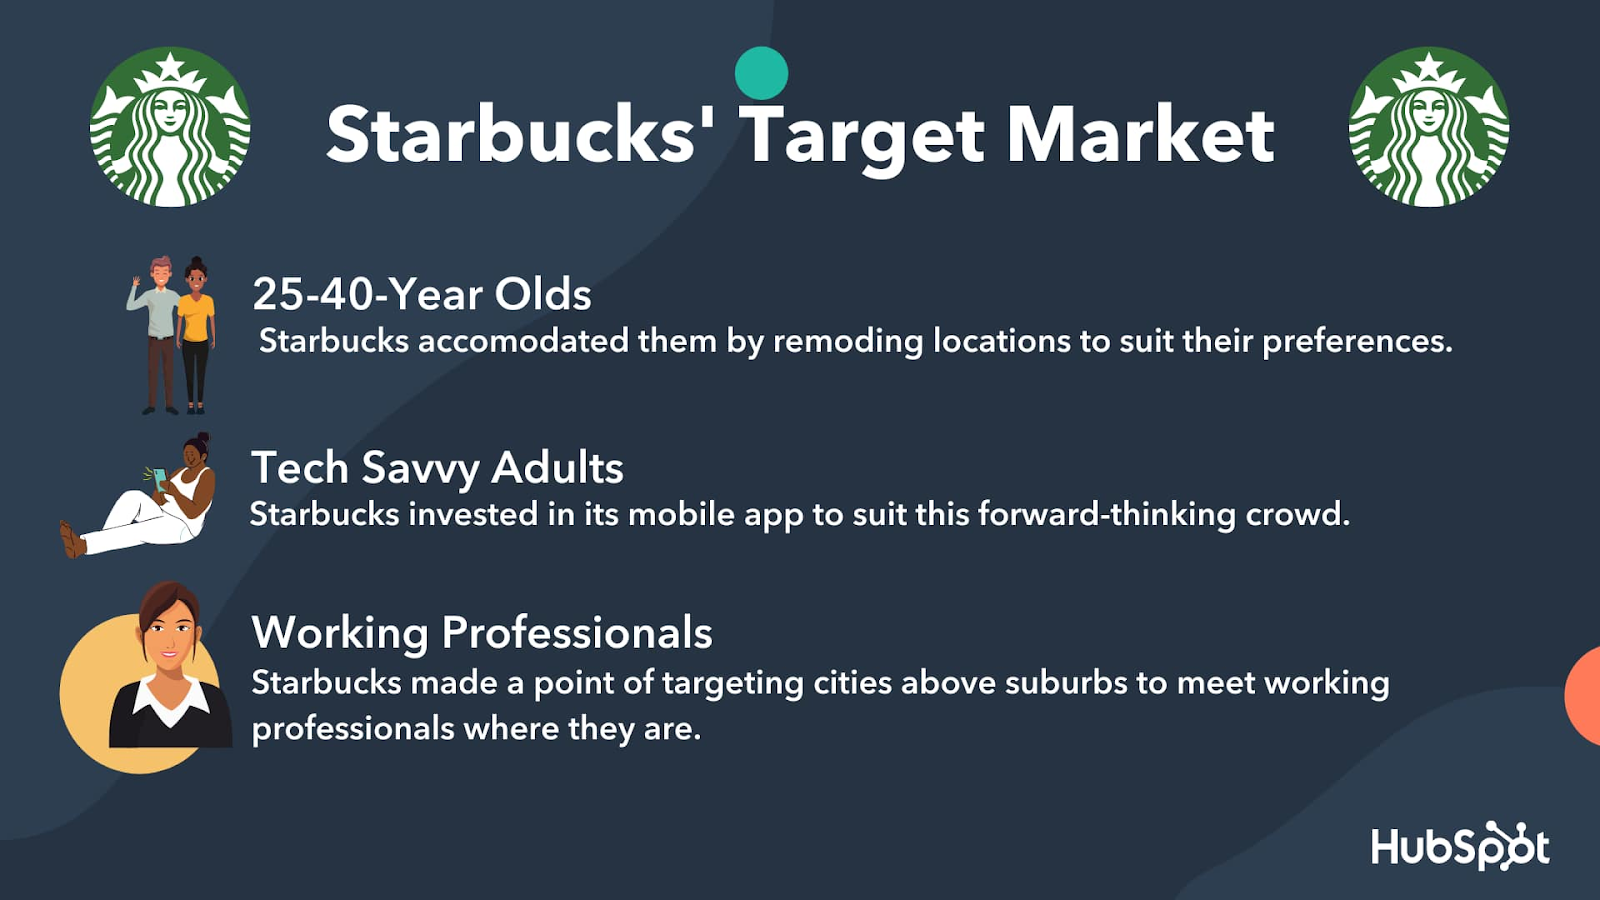 An example of Starbucks' target market